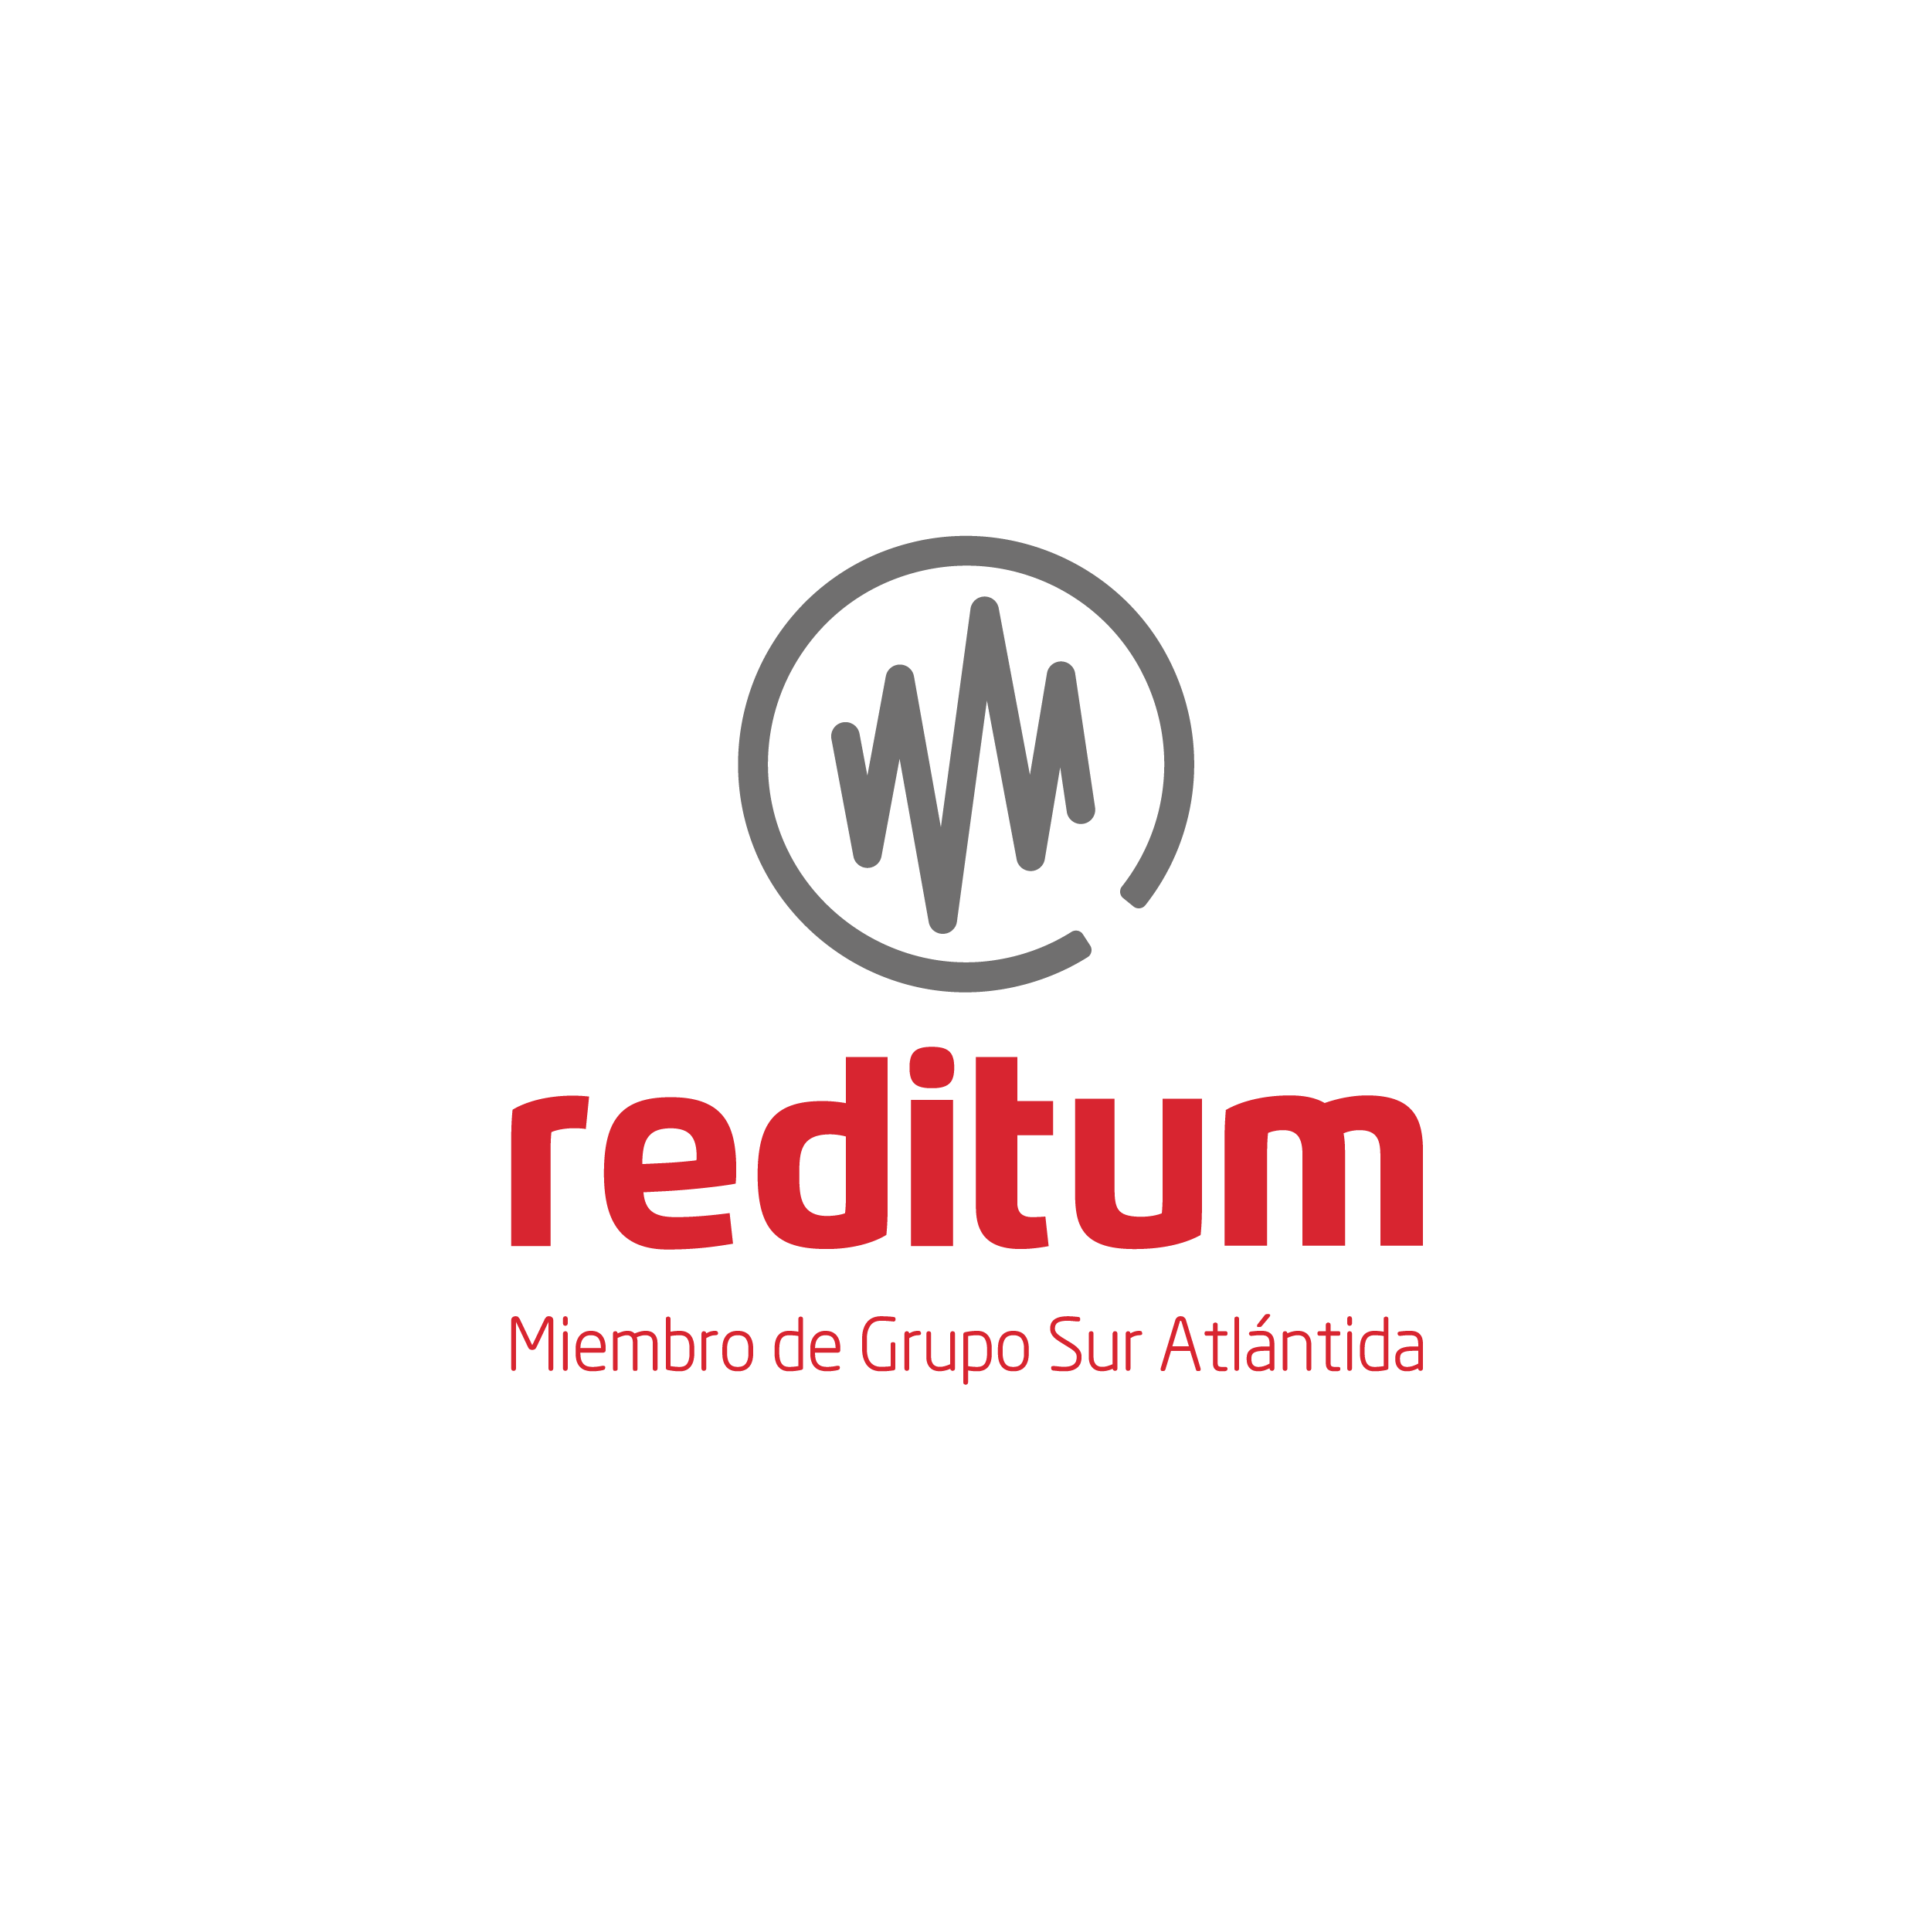 Reditum logo 2020